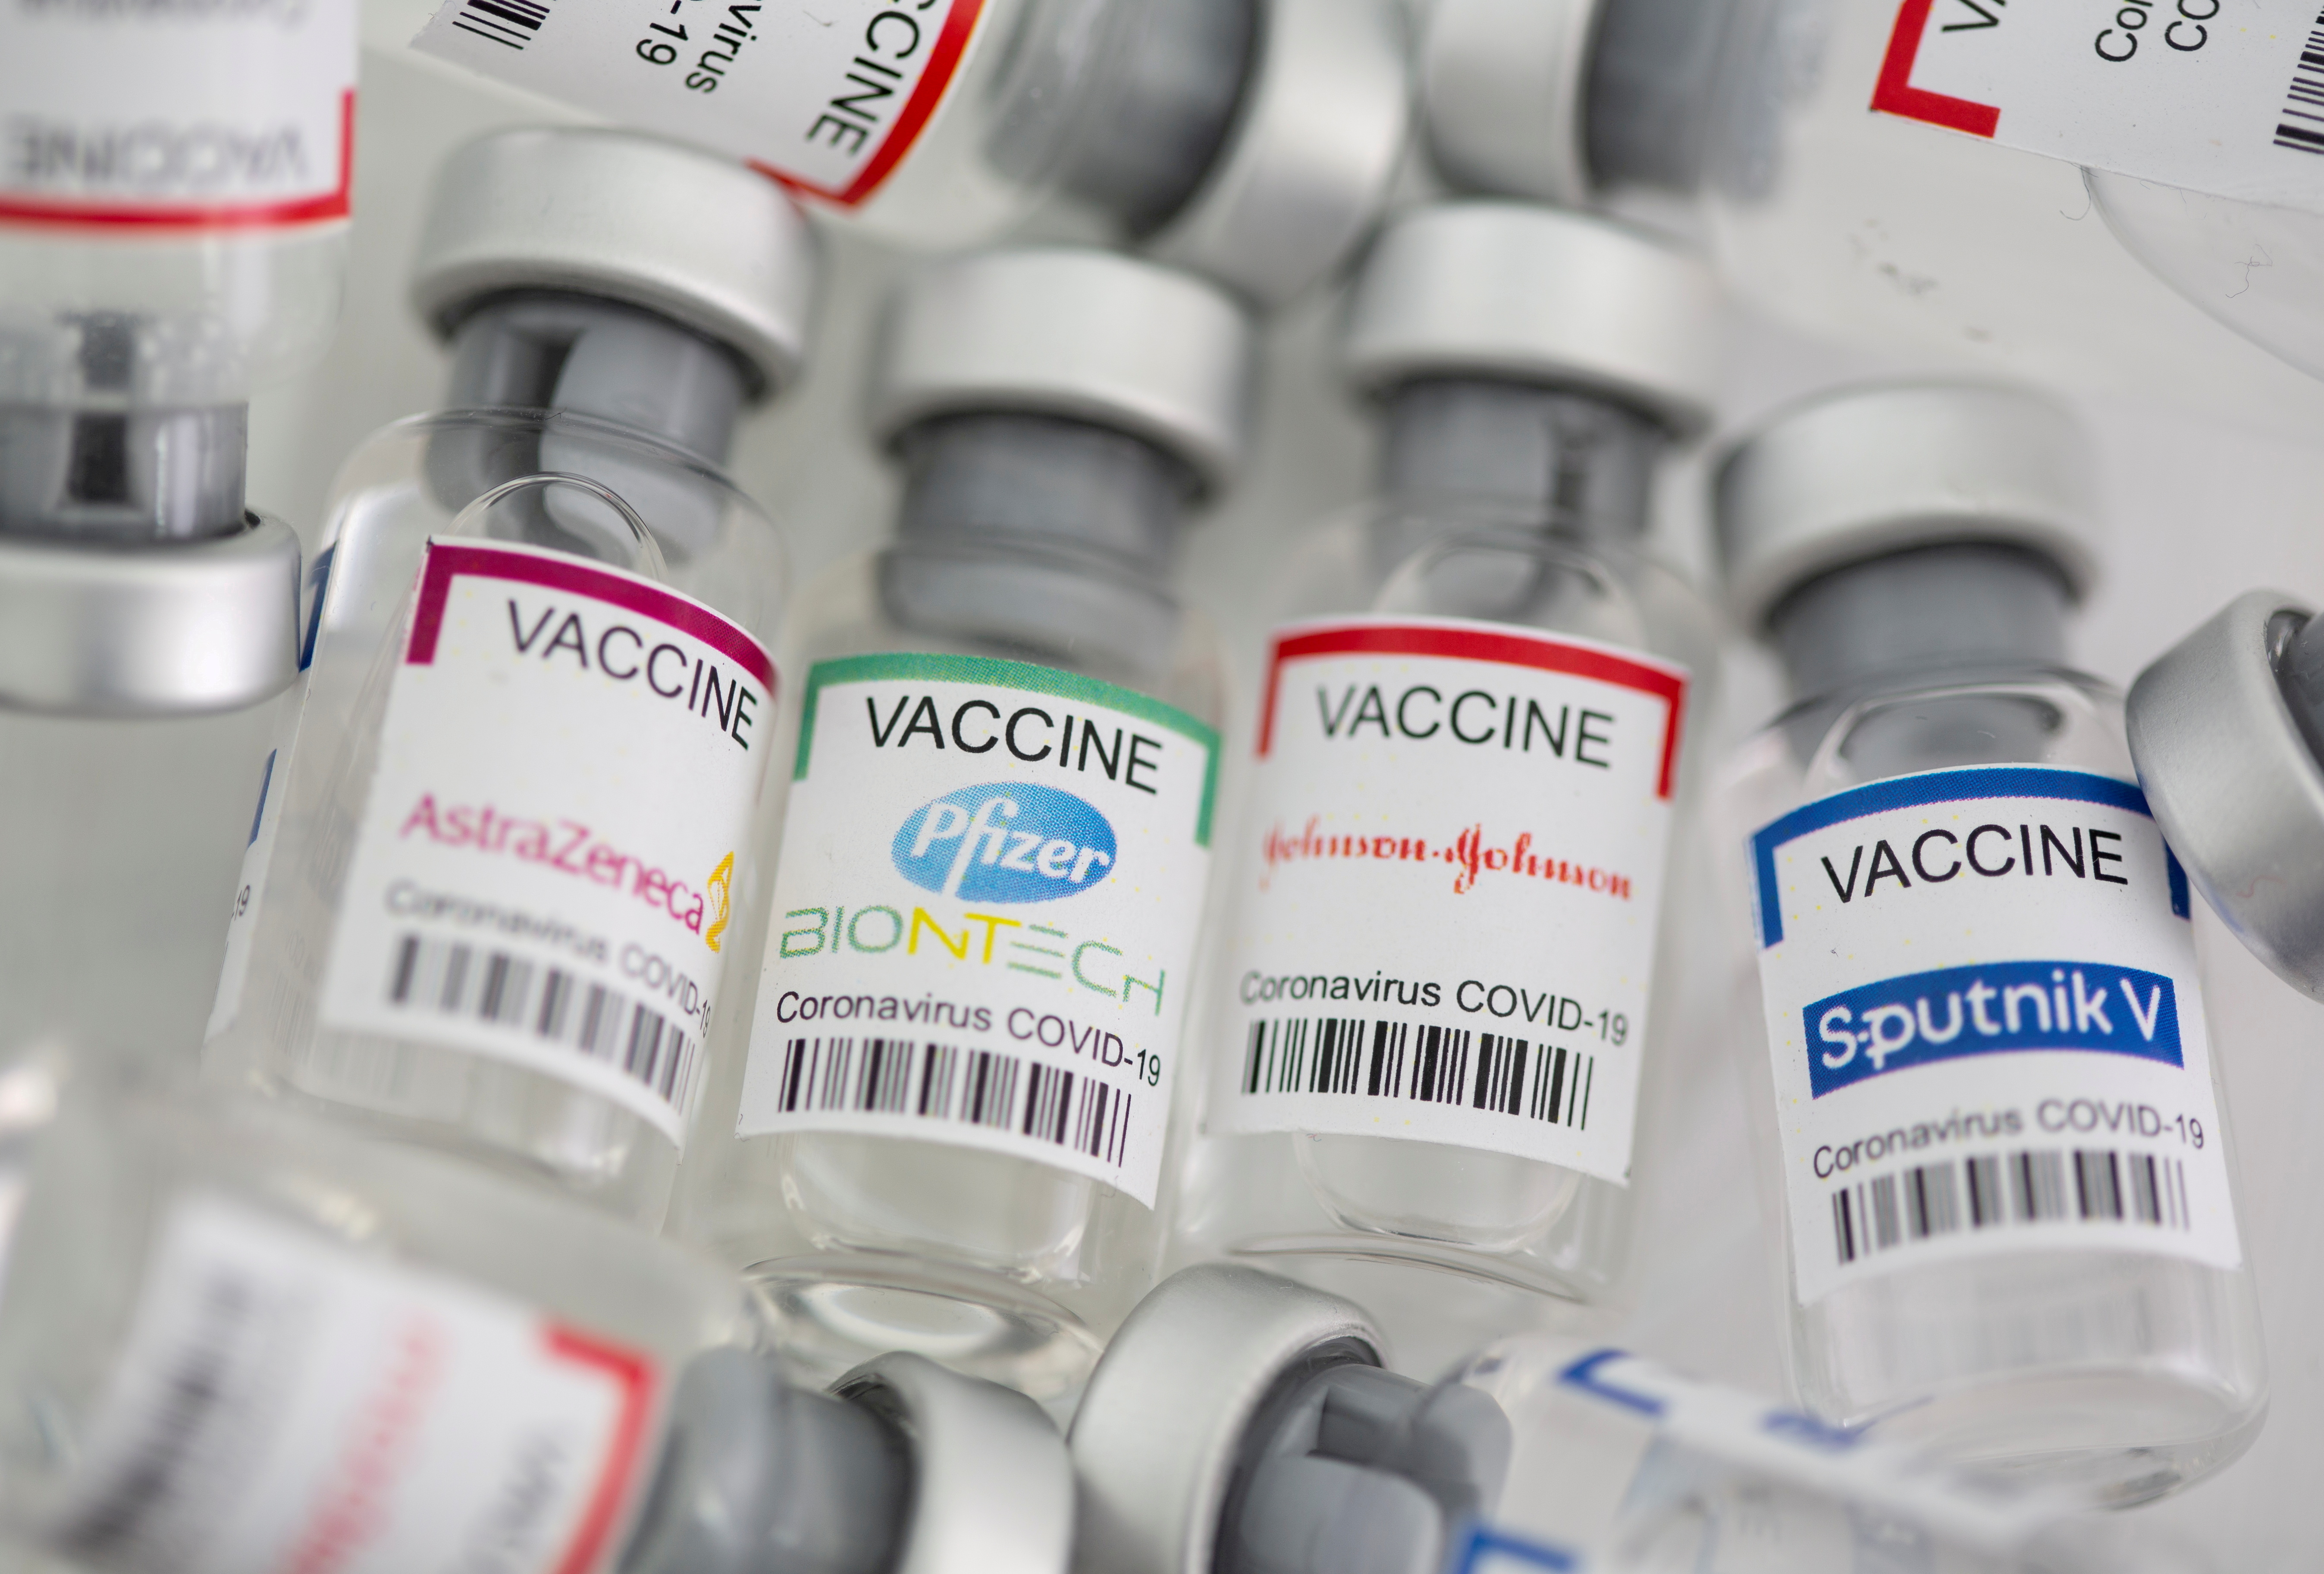 Vials labelled "AstraZeneca, Pfizer - Biontech, Johnson&Johnson, Sputnik V coronavirus disease (COVID-19) vaccine" are seen in this illustration picture